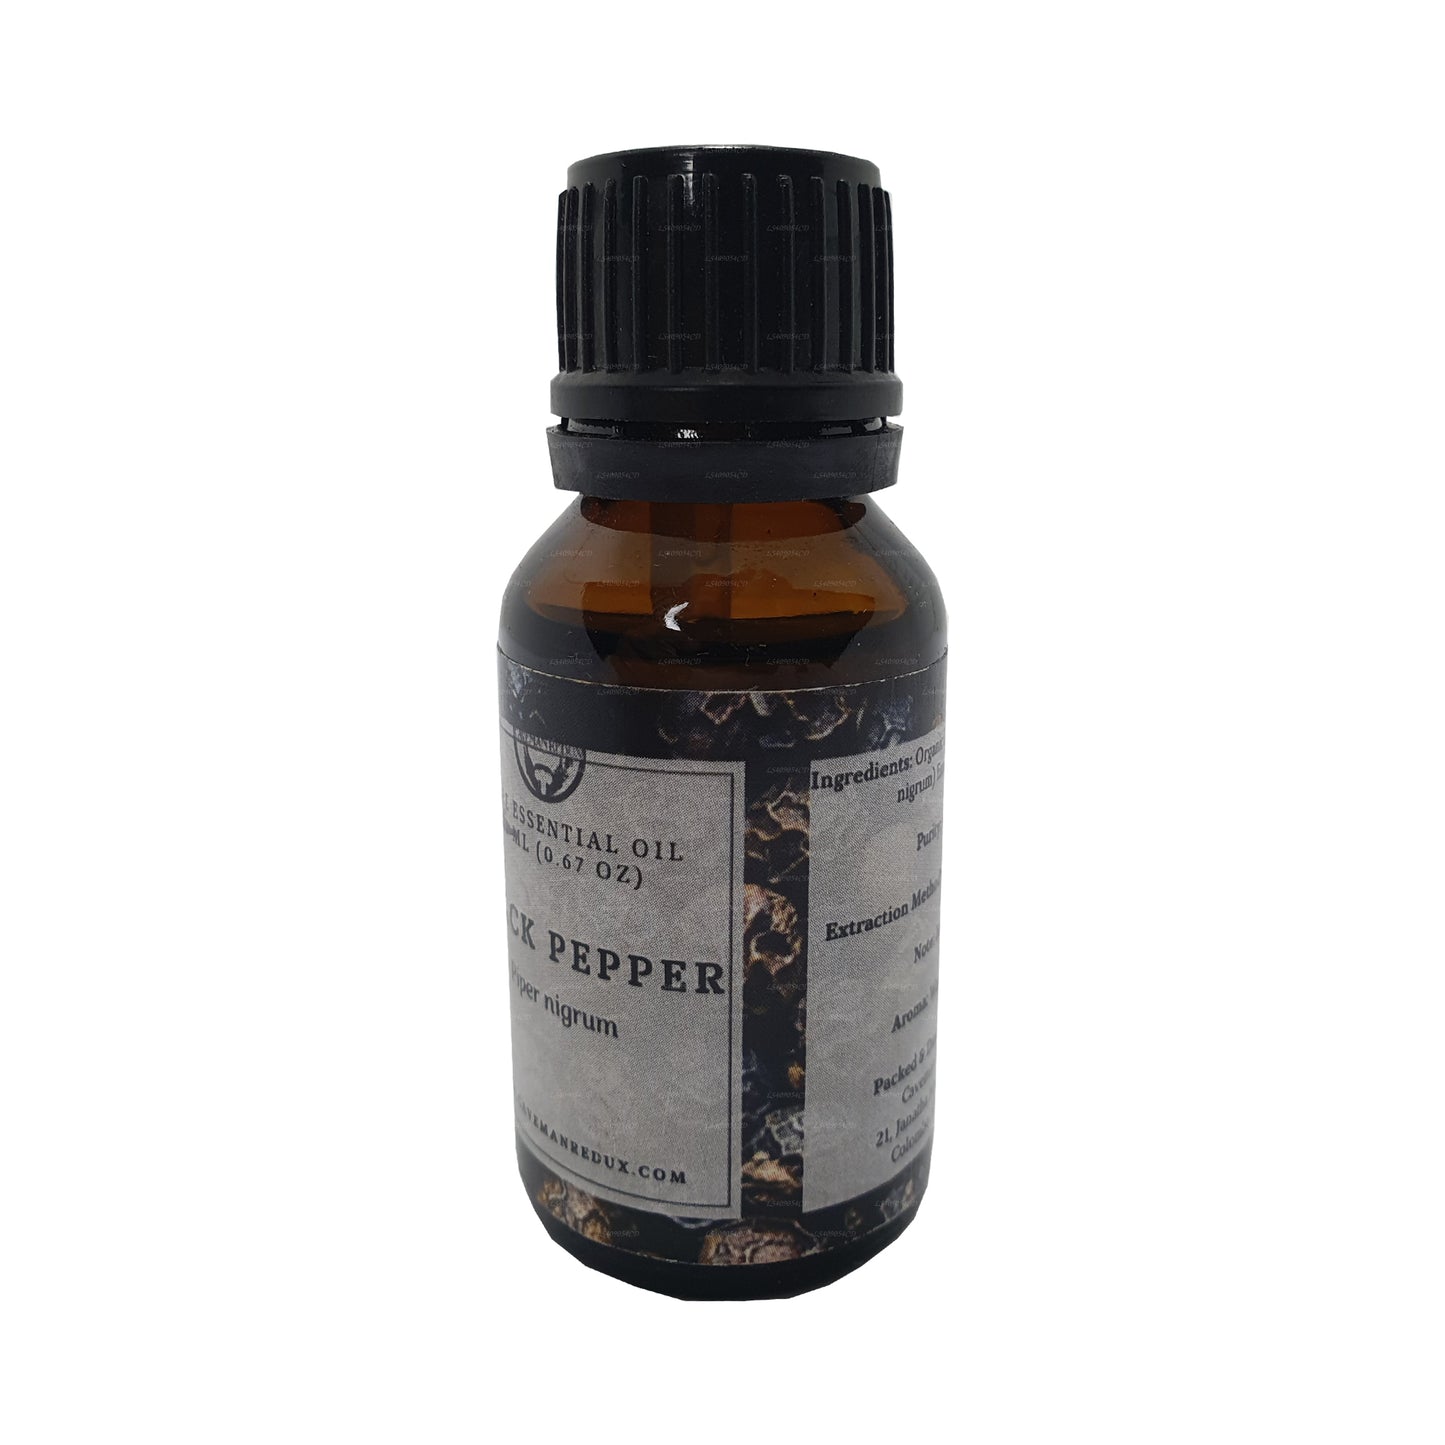 Lakpura Black Pepper Essential Oil (15ml)